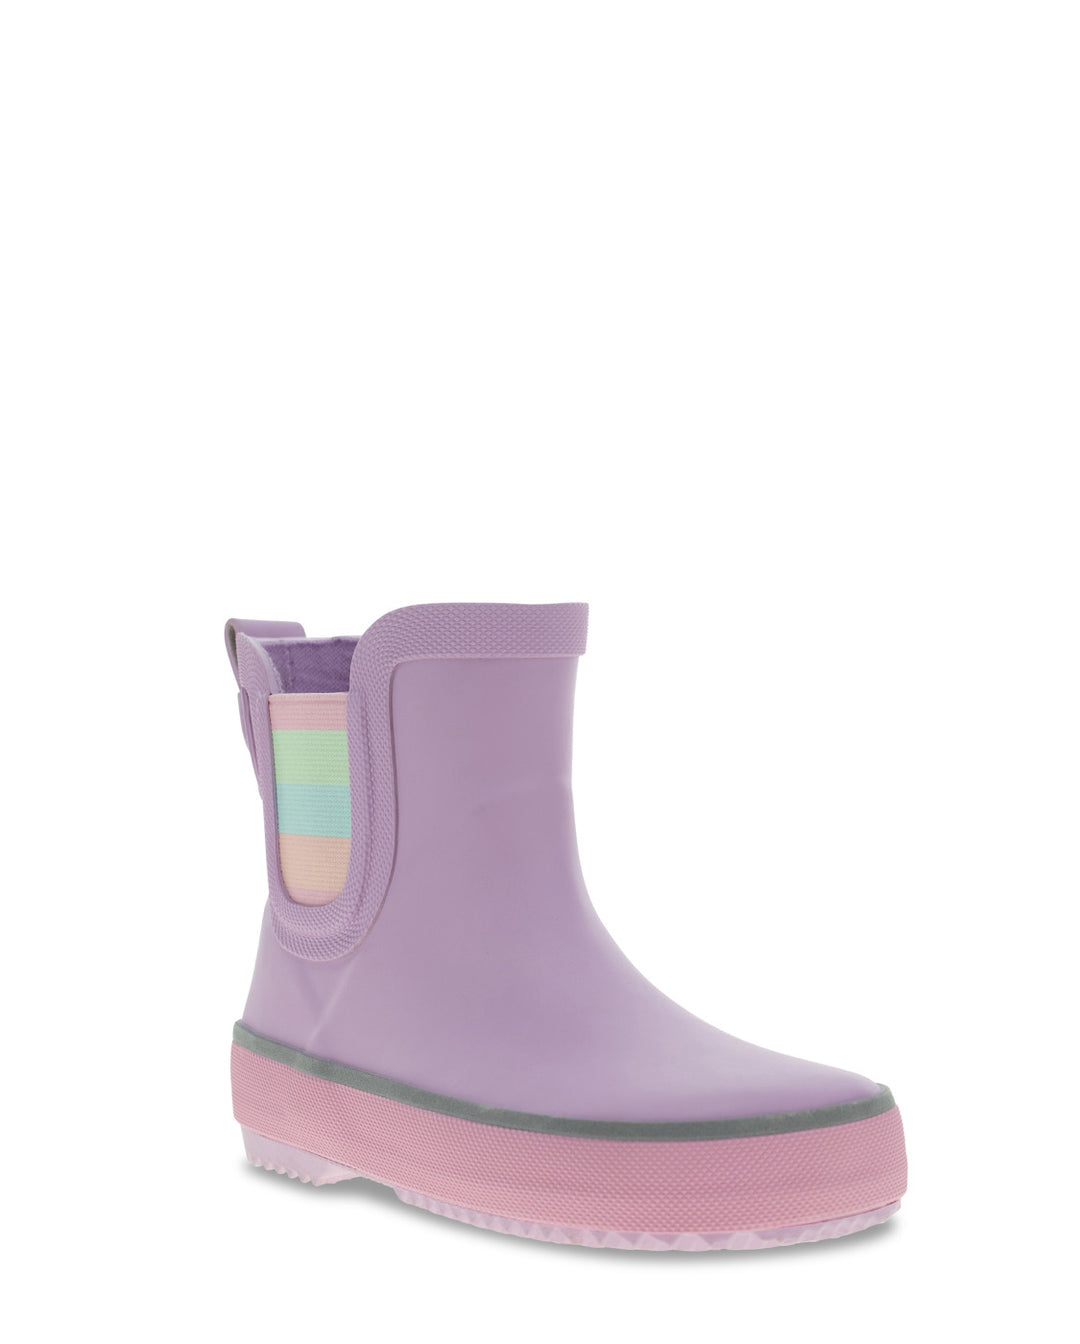 New! Kids Element Chelsea Rain Boot - Lilac